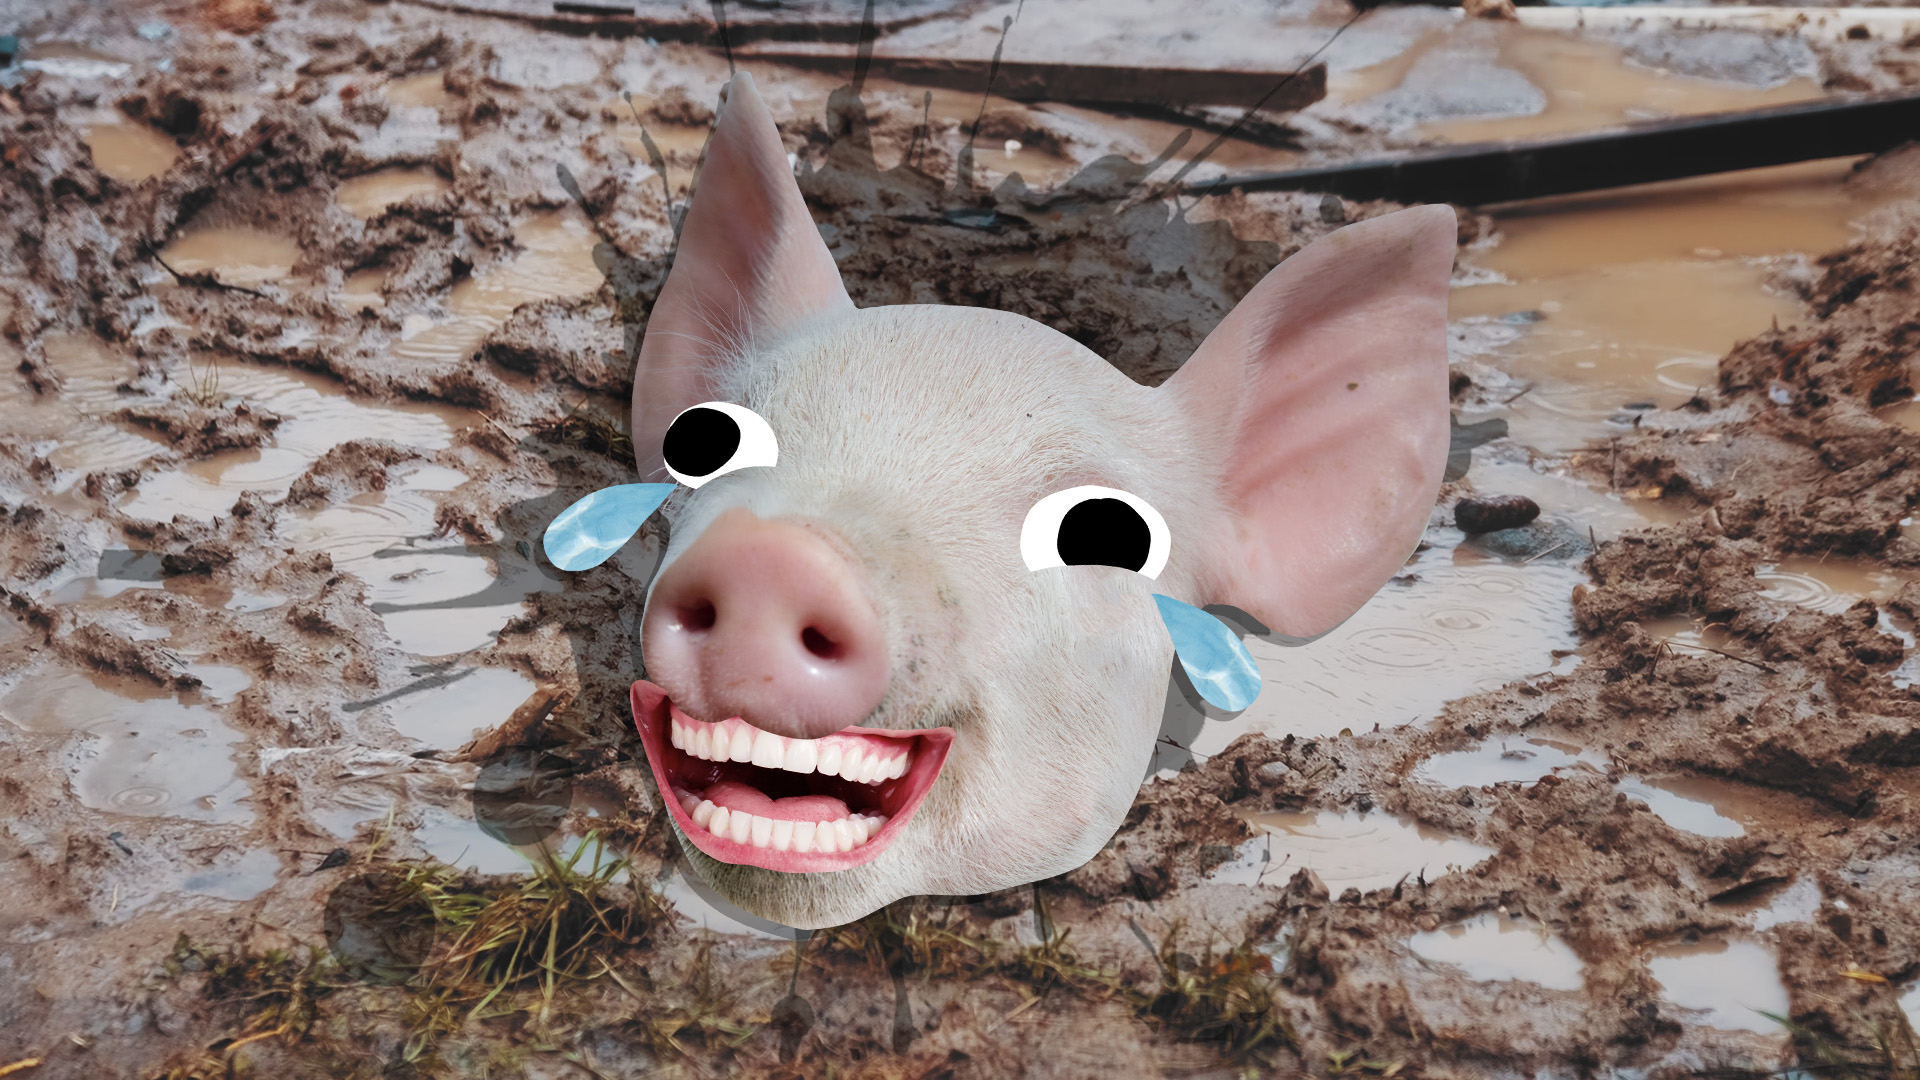 A muddy pig